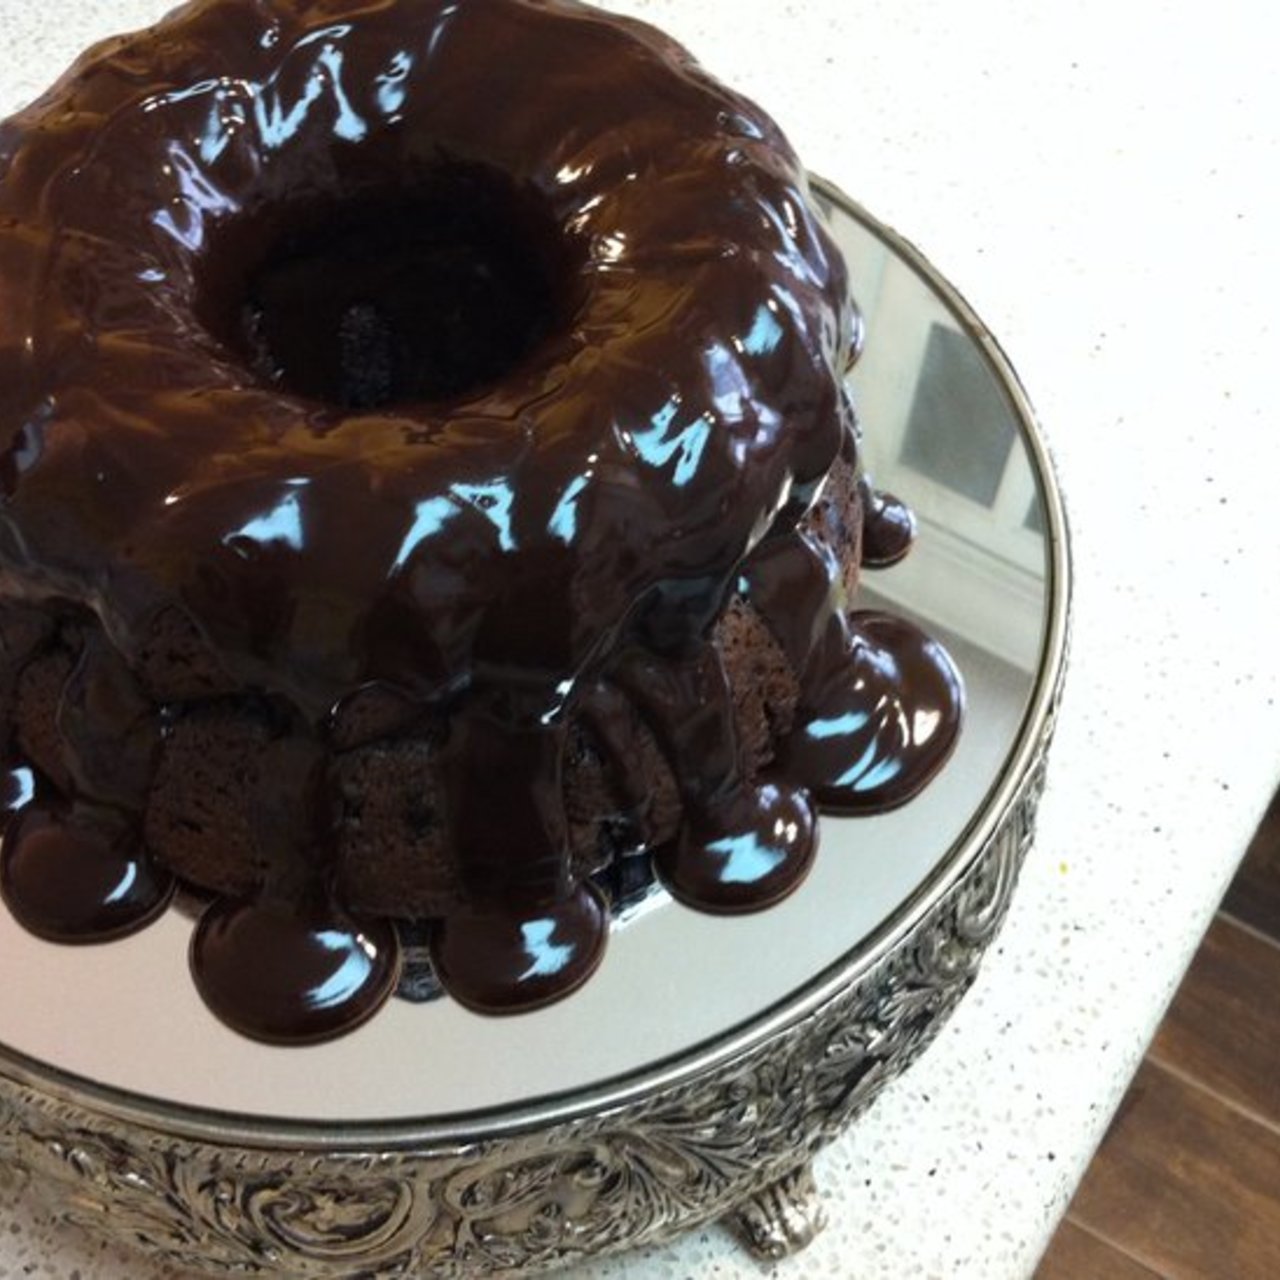 Chocolate Pudding Cake (4 ingredients)